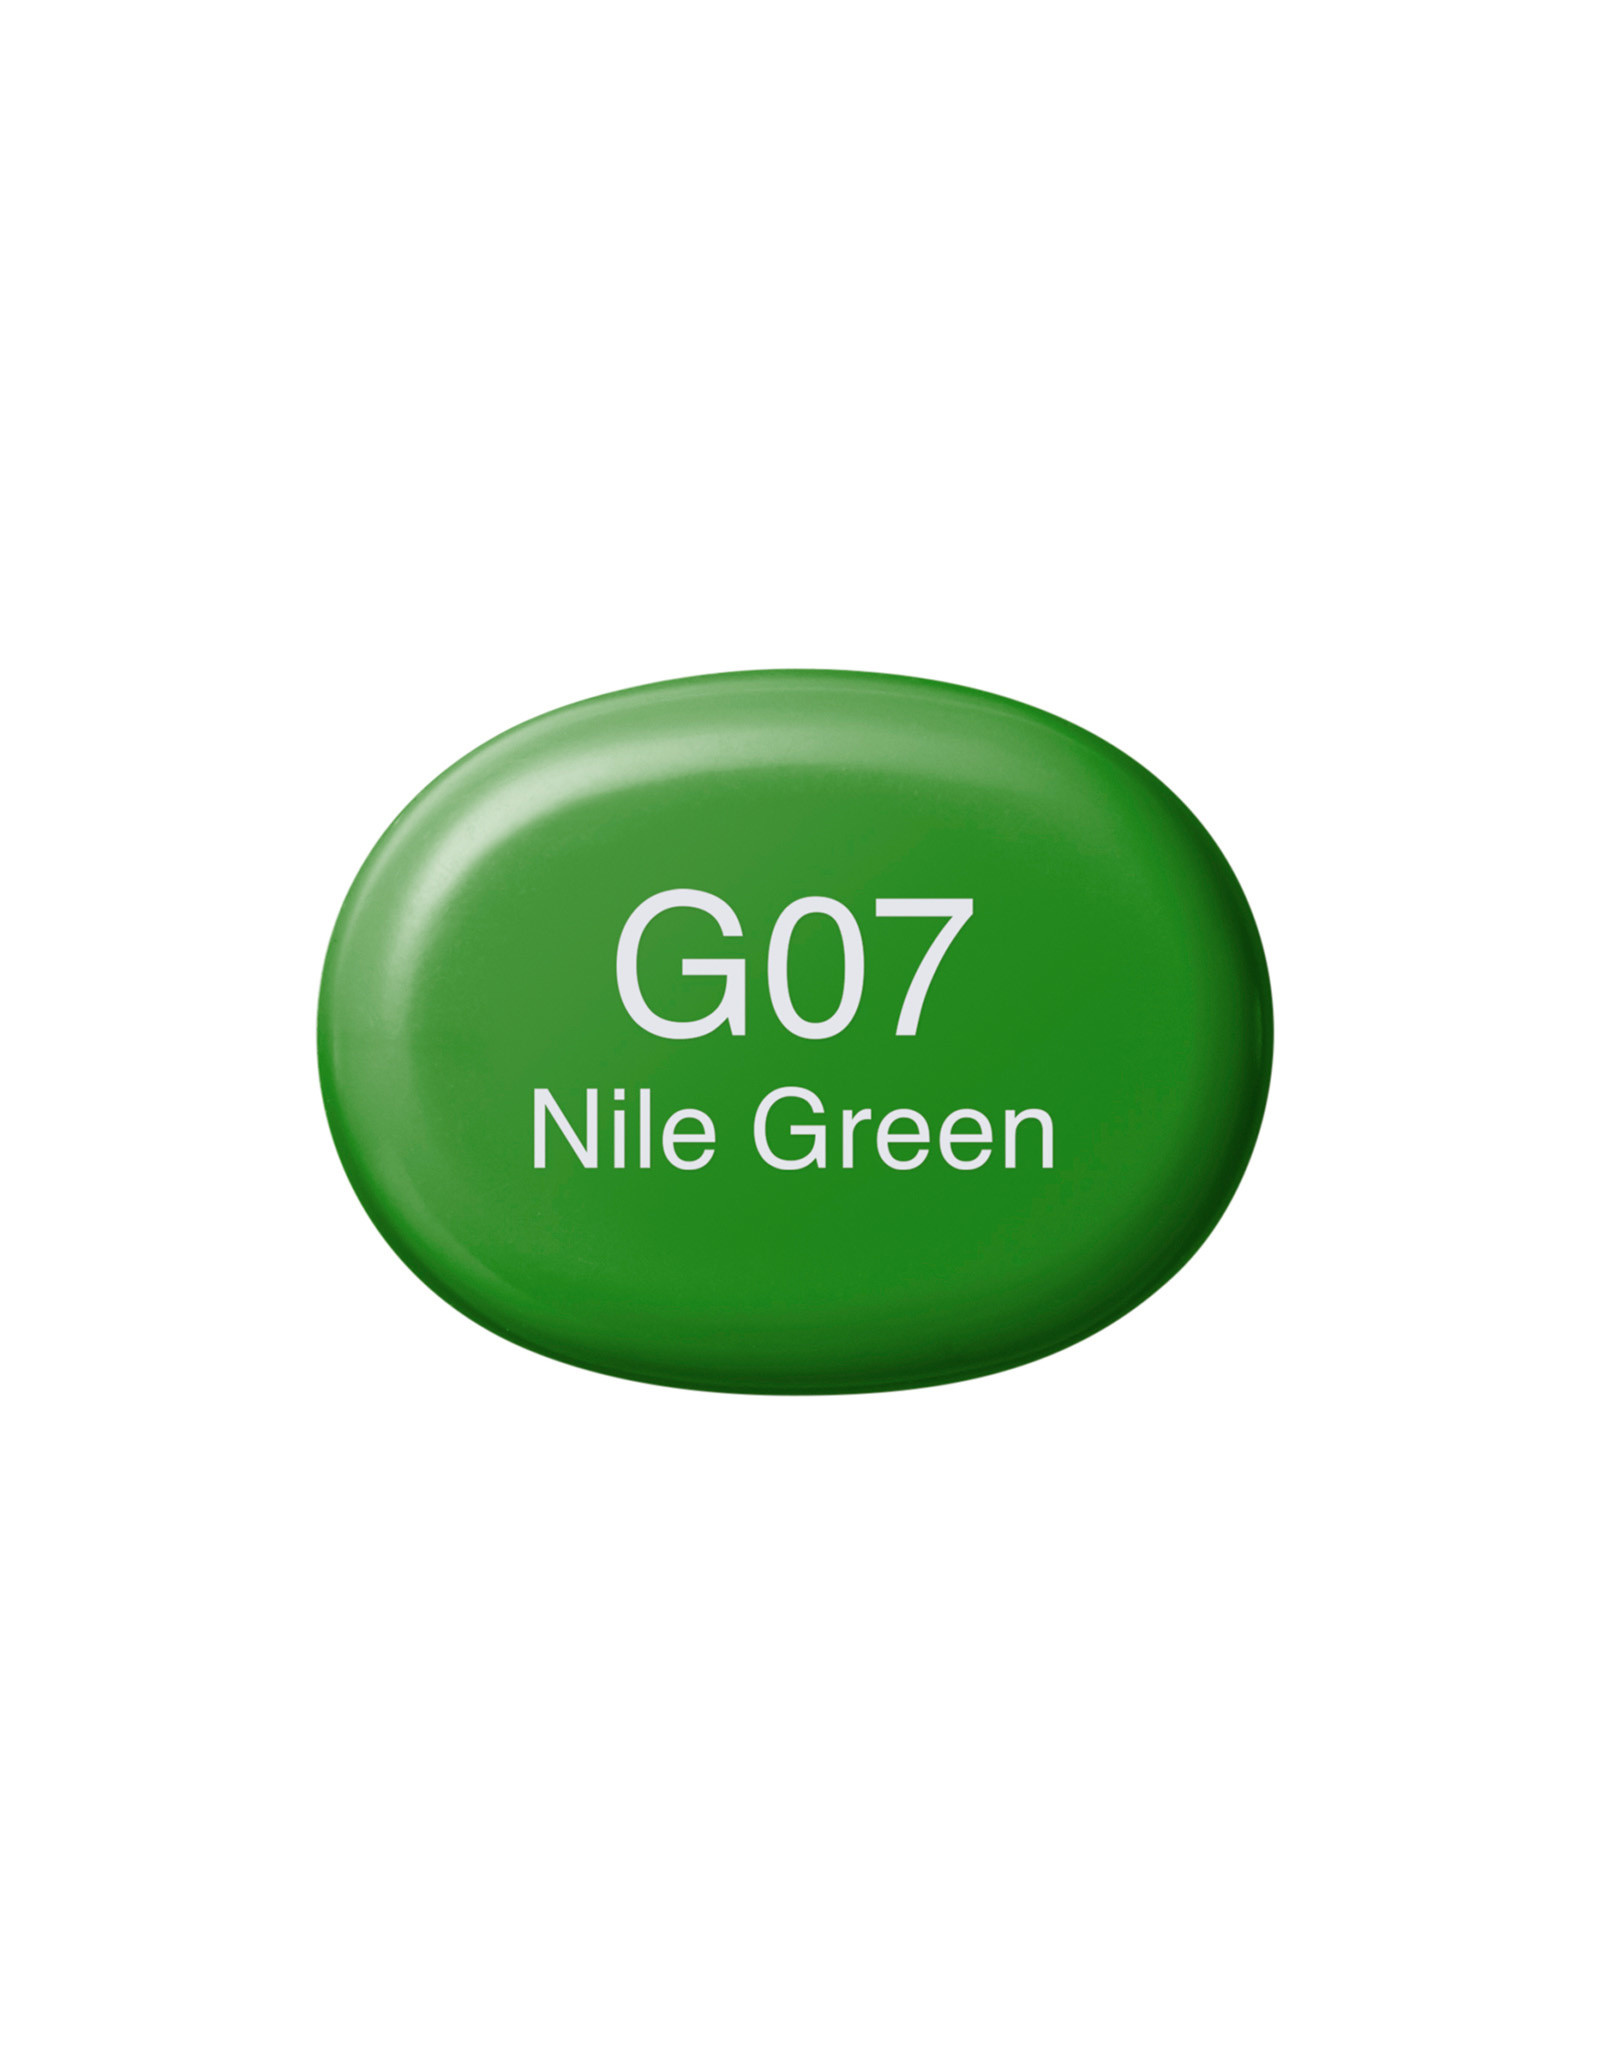 COPIC COPIC Sketch Marker G07 Nile Green